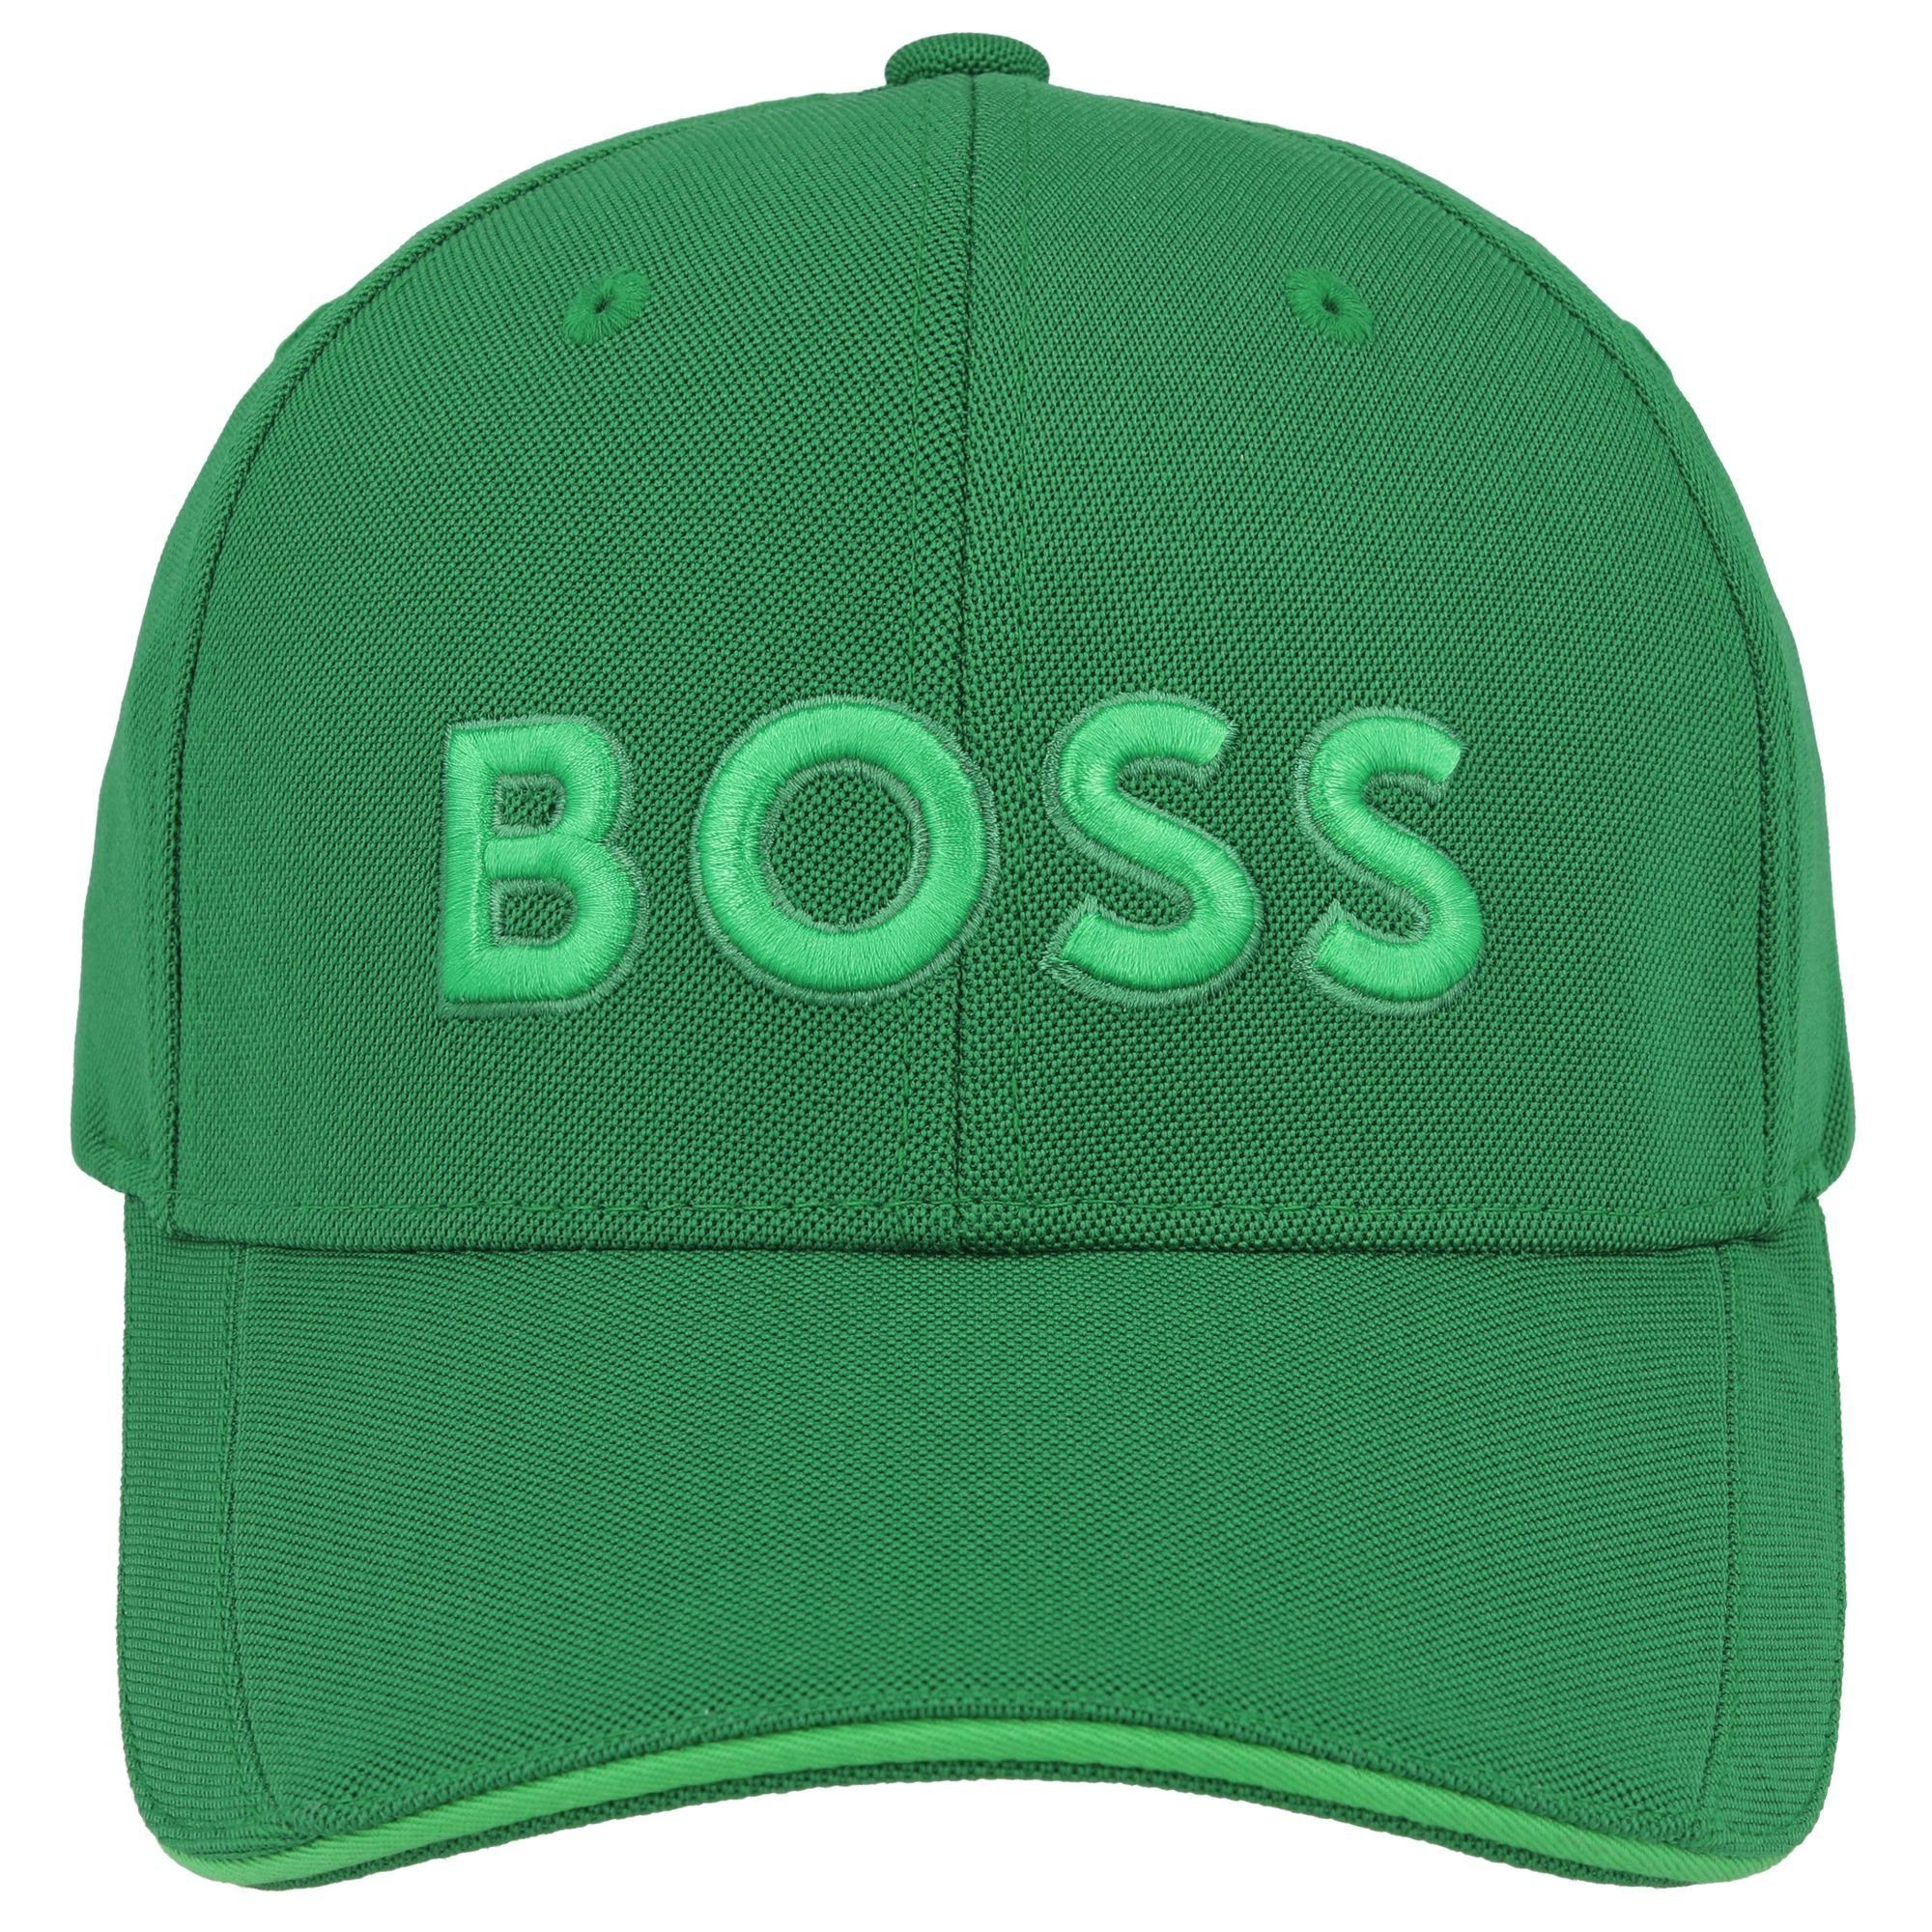 BOSS Baseball Caps für Herren kaufen » BOSS Basecaps | OTTO